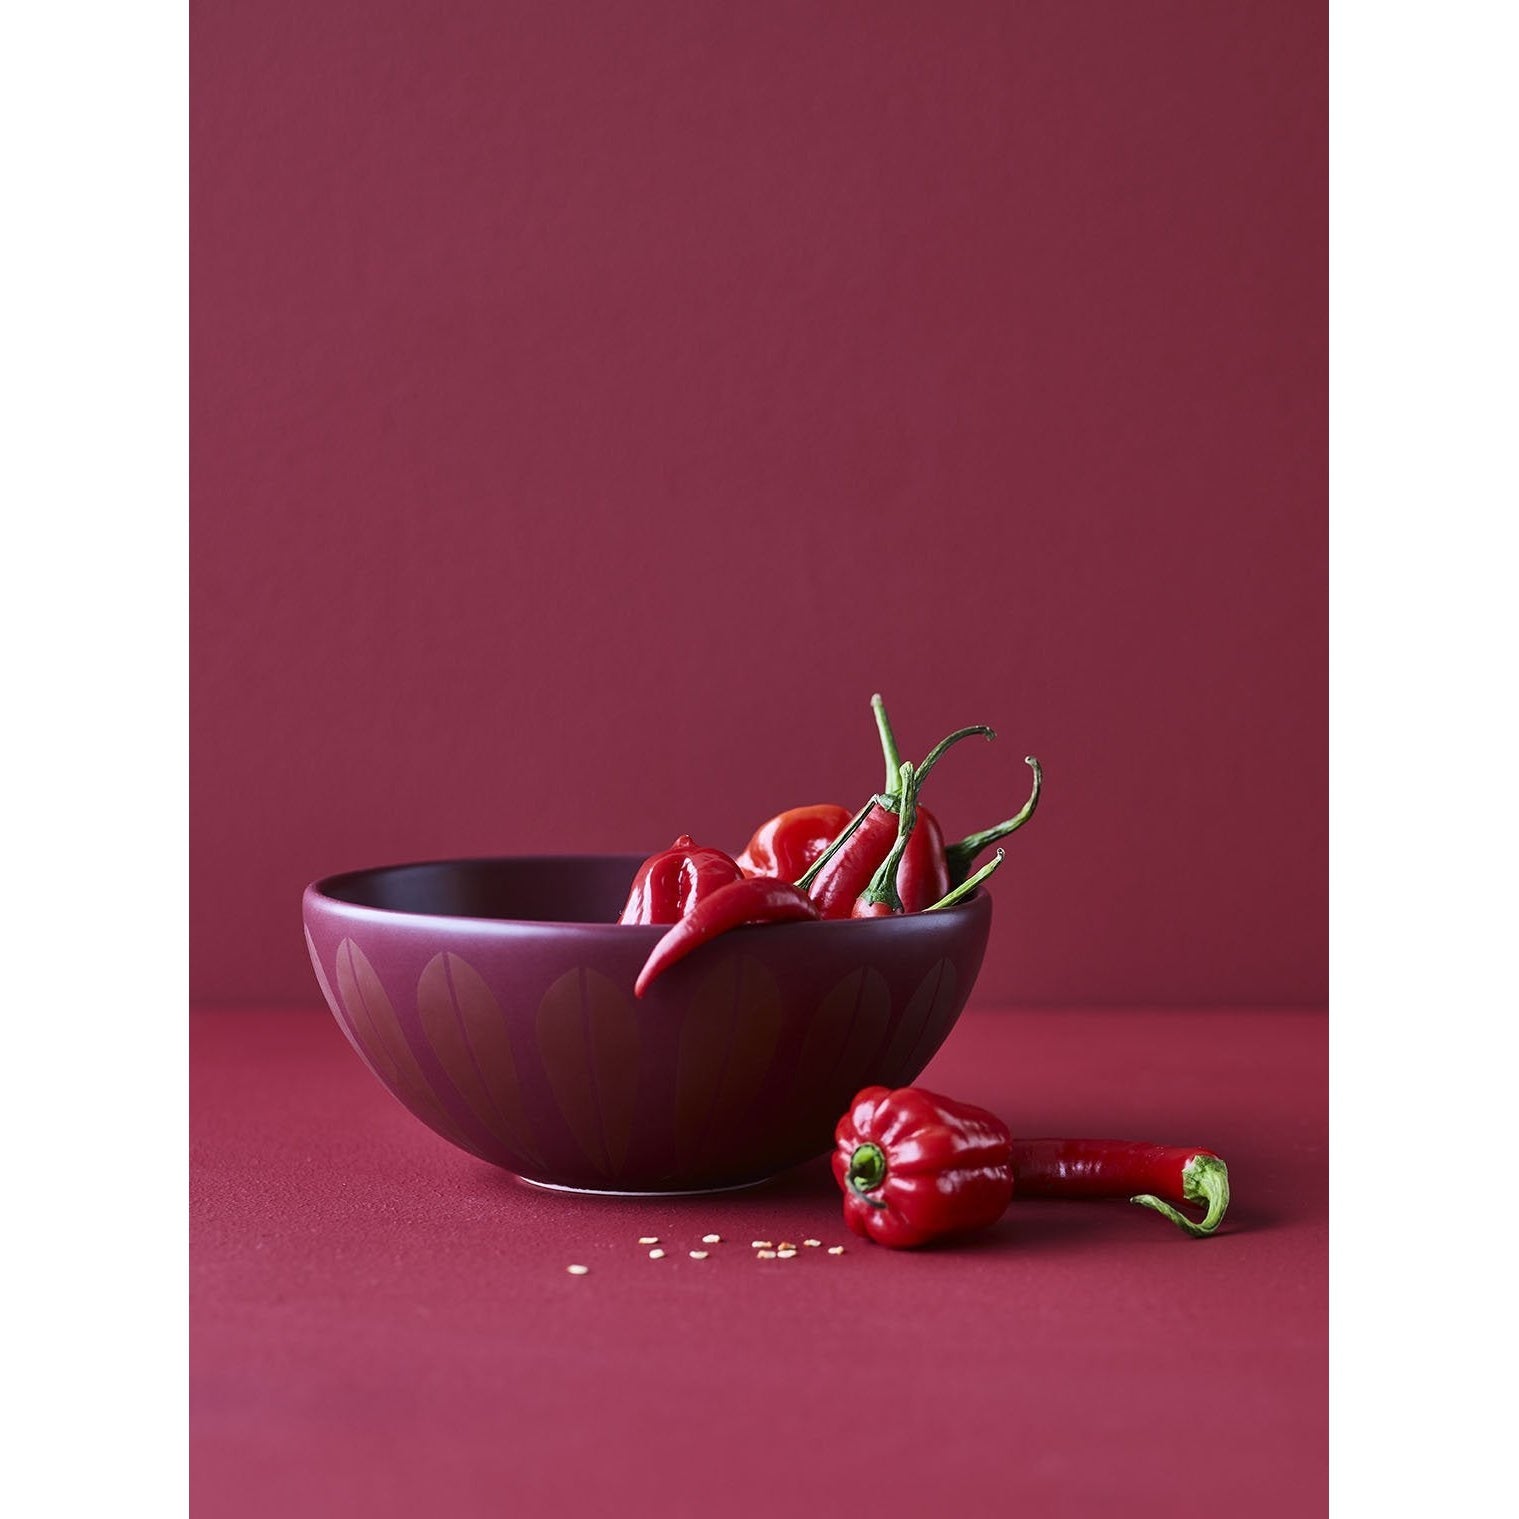 Lucie Kaas Arne Clausen Bowl Red Dark, 12 cm